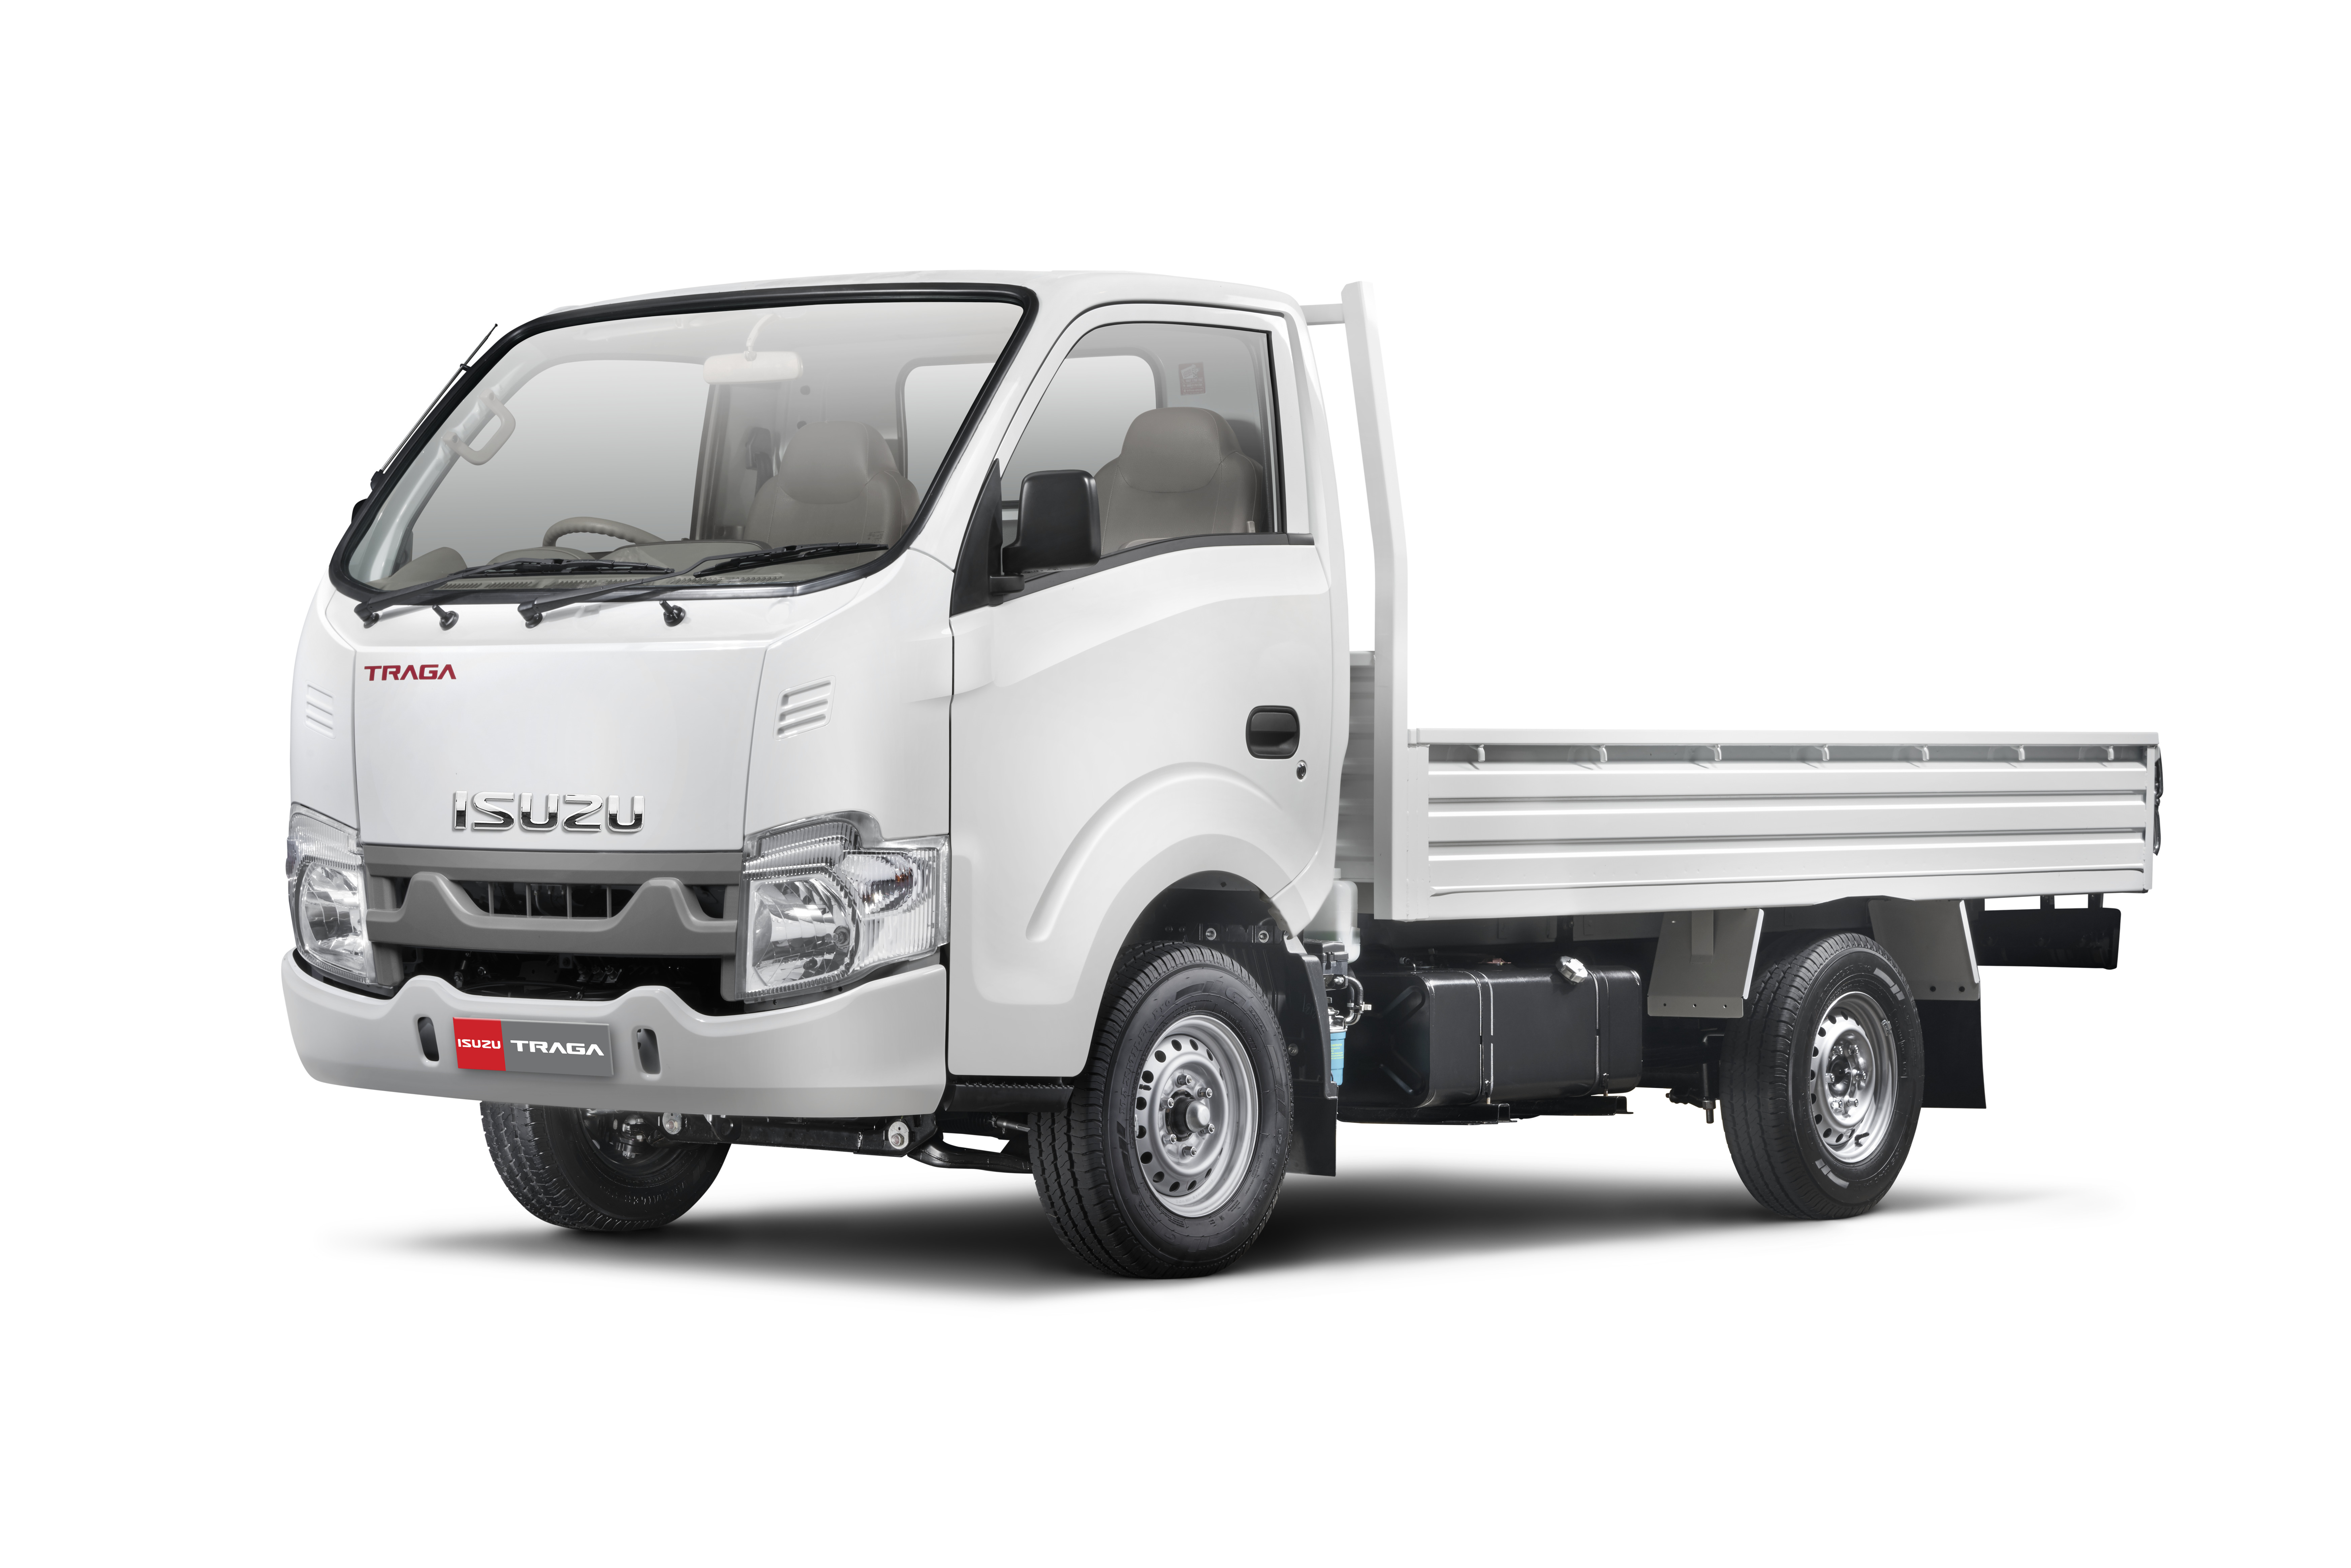 Isuzu Launches Traga Light-Duty Truck in Indonesia